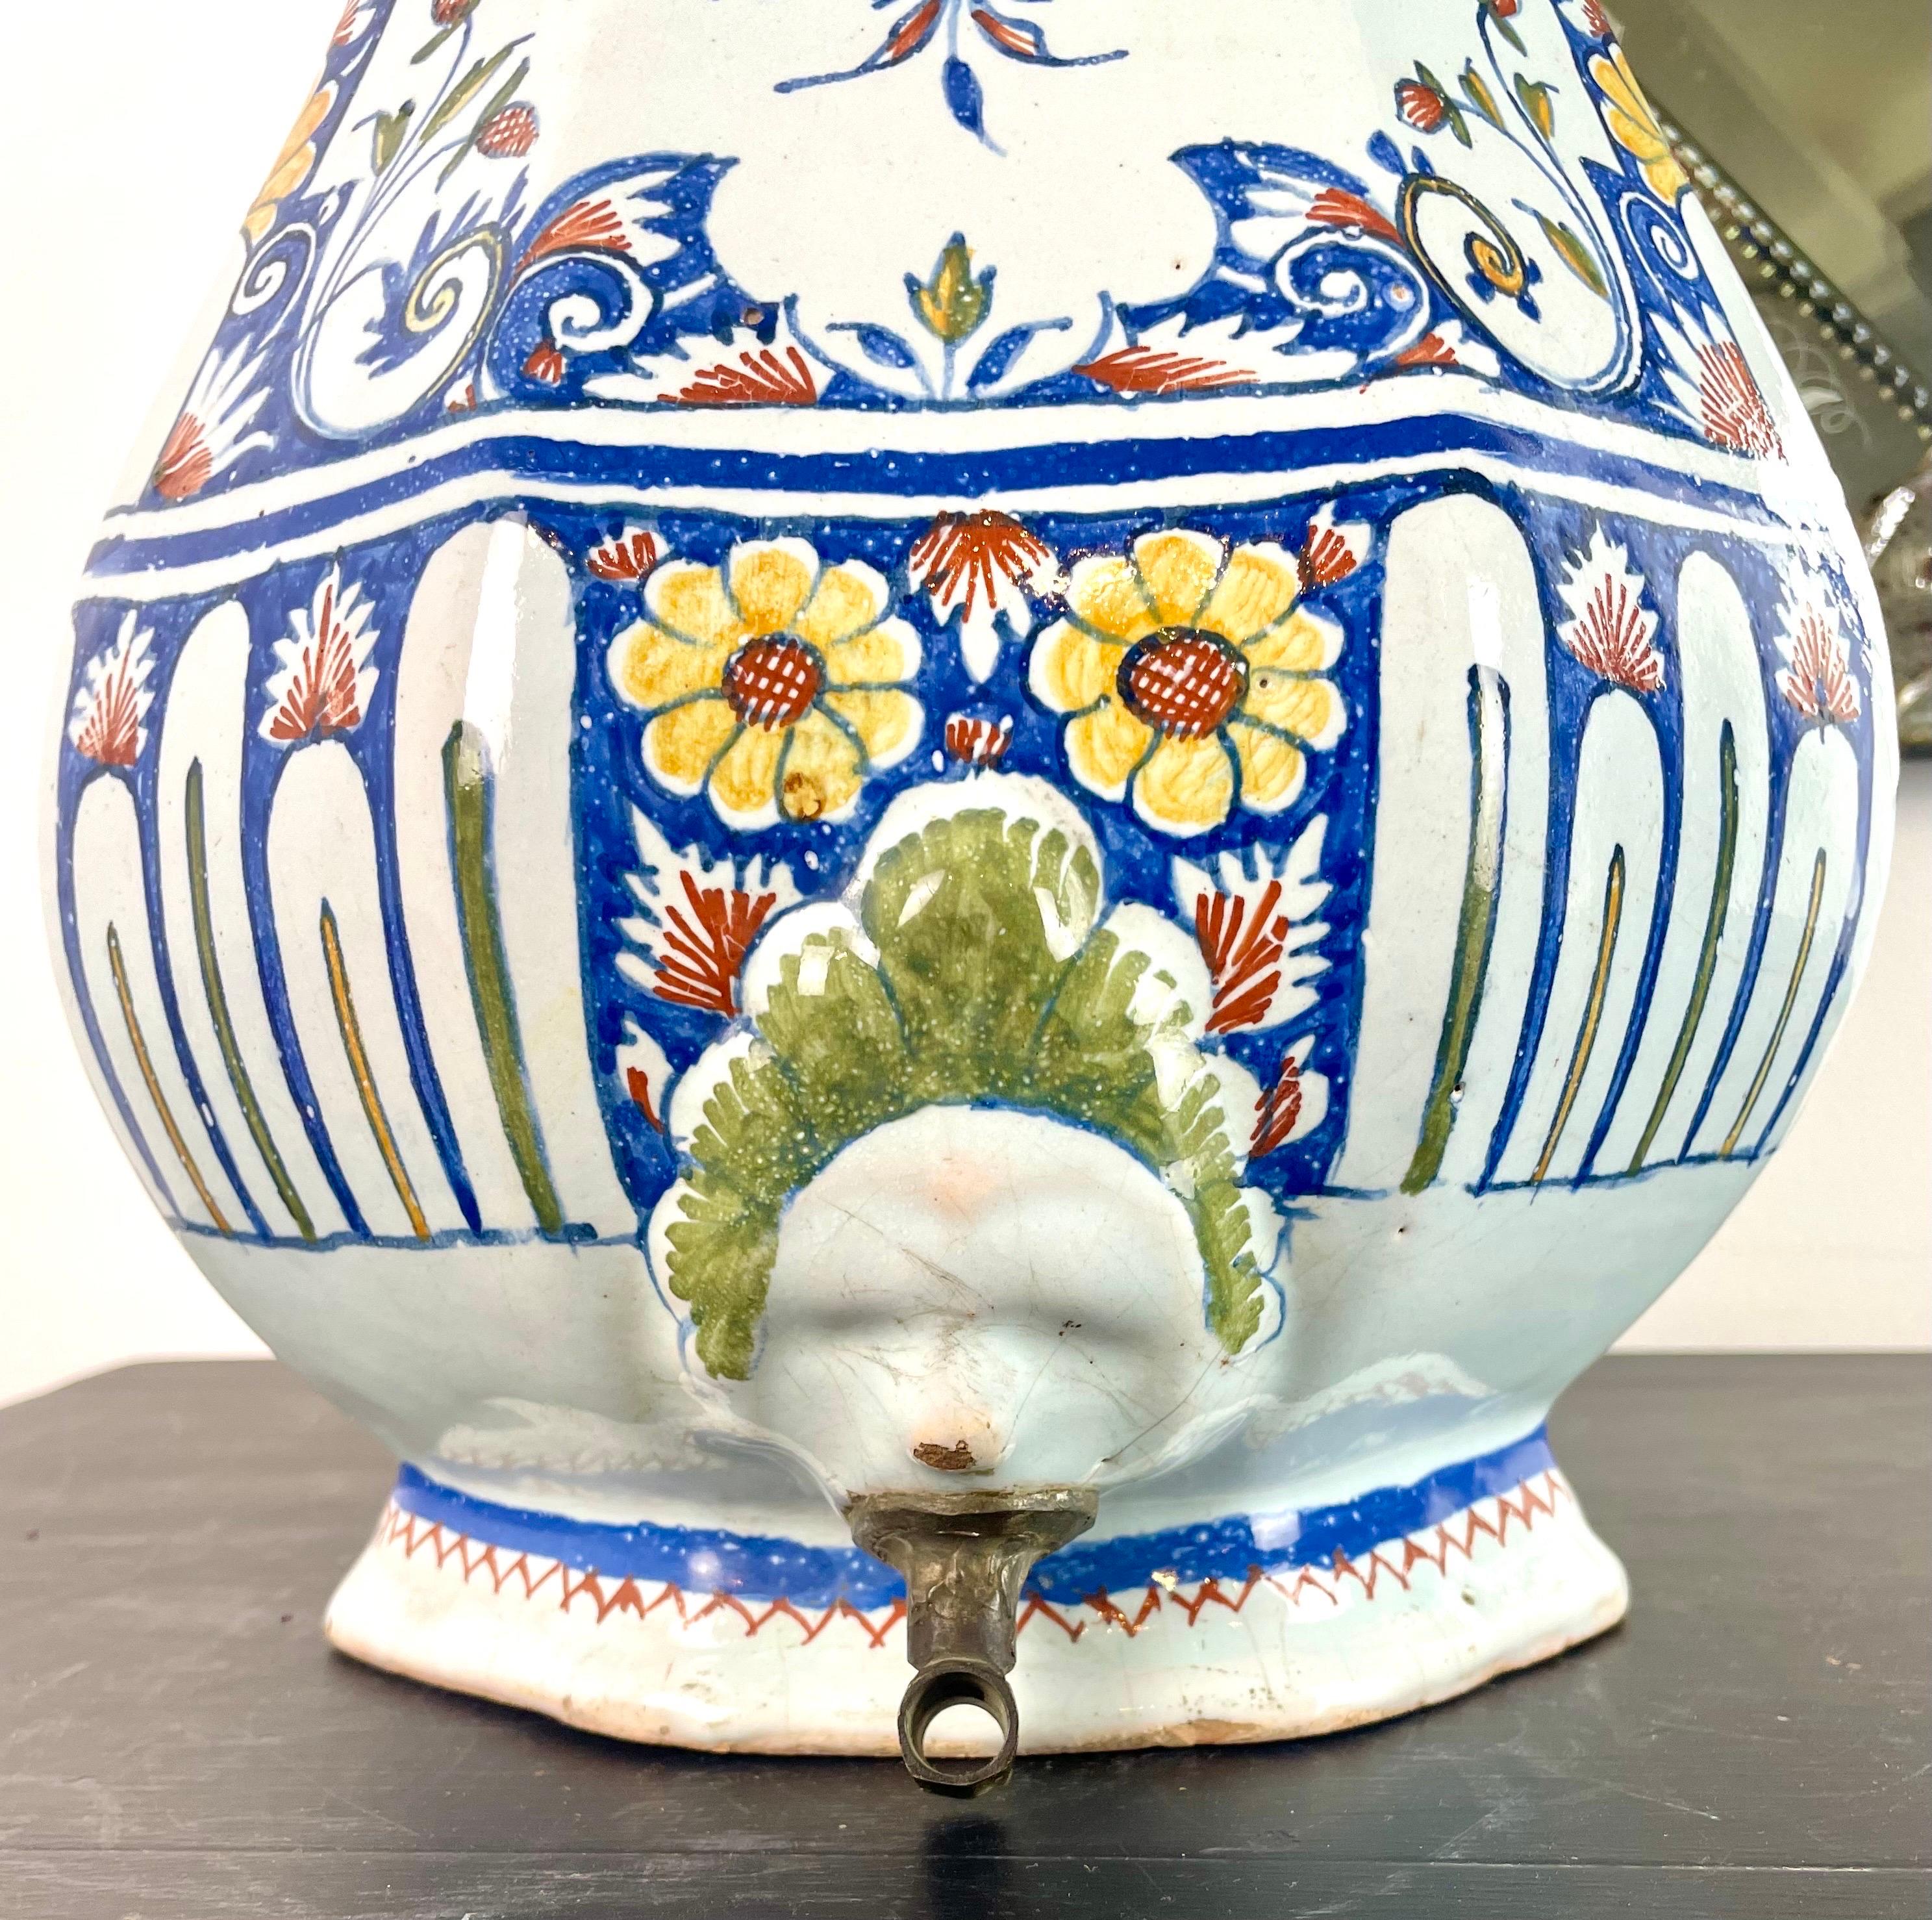 Vase - Rouen earthenware fountain, flower pot - blue white - 18th century France For Sale 4